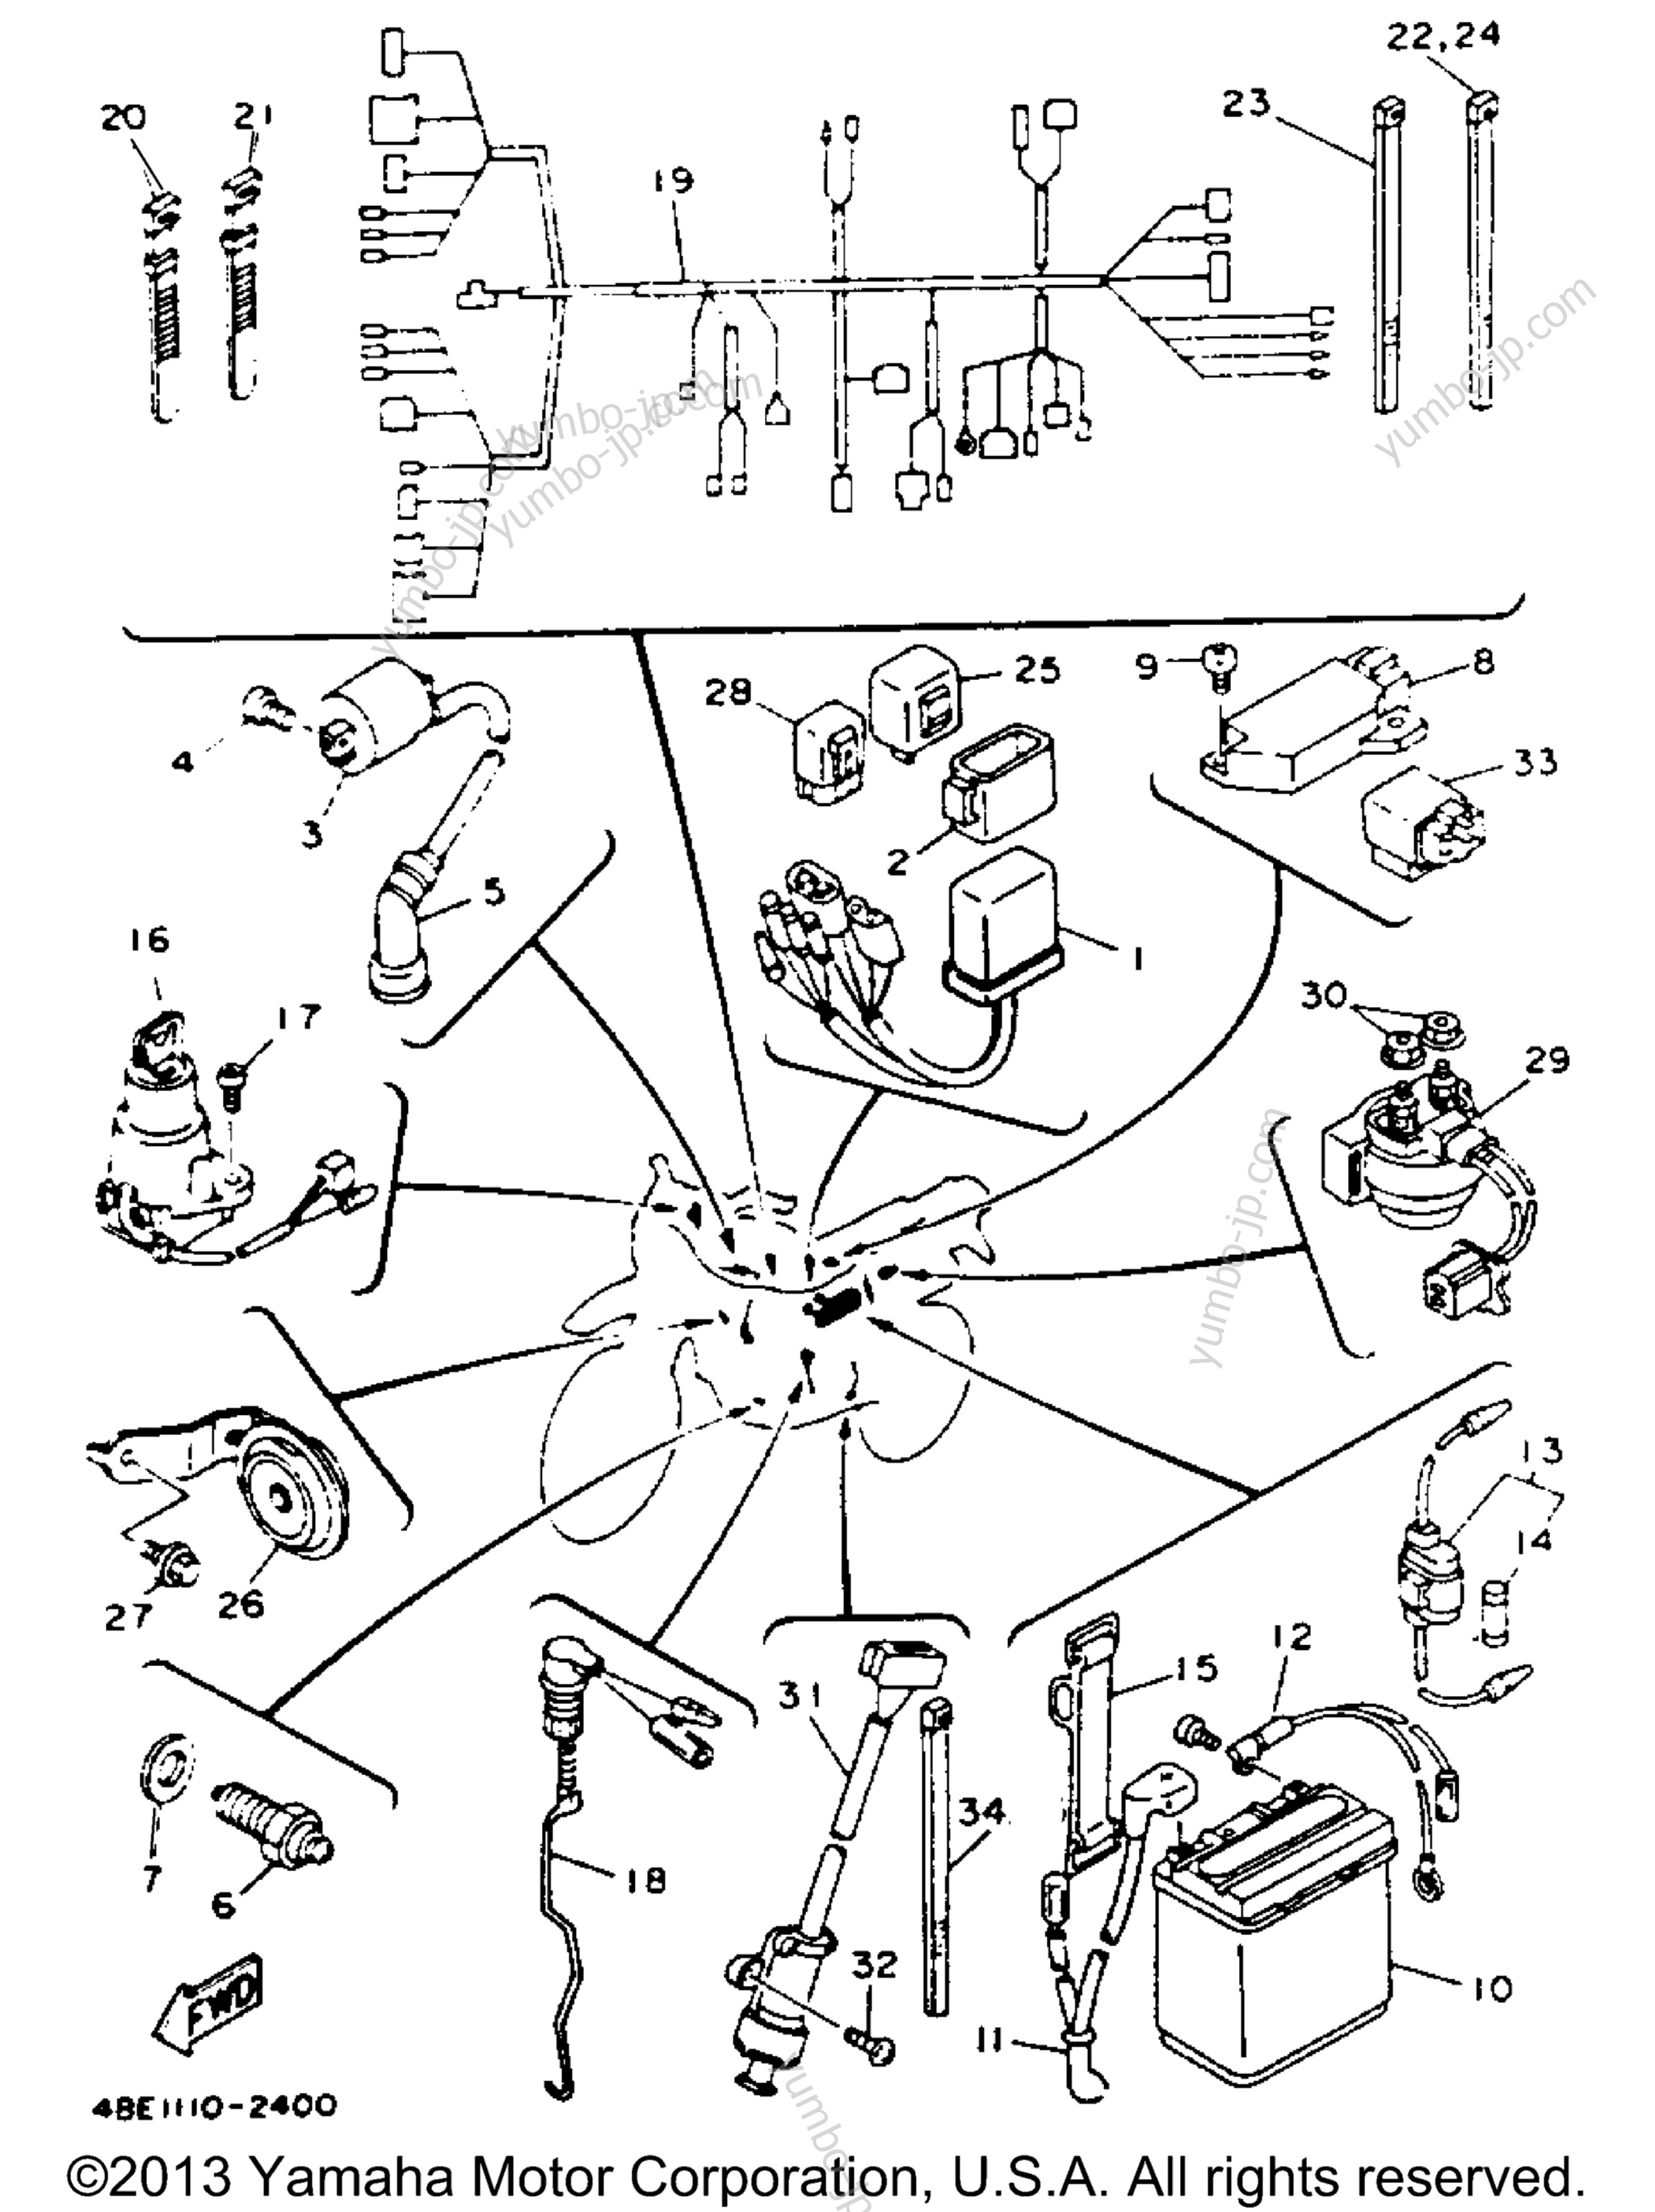 Electrical 1 for motorcycles YAMAHA SEROW (XT225EC) CA 1993 year